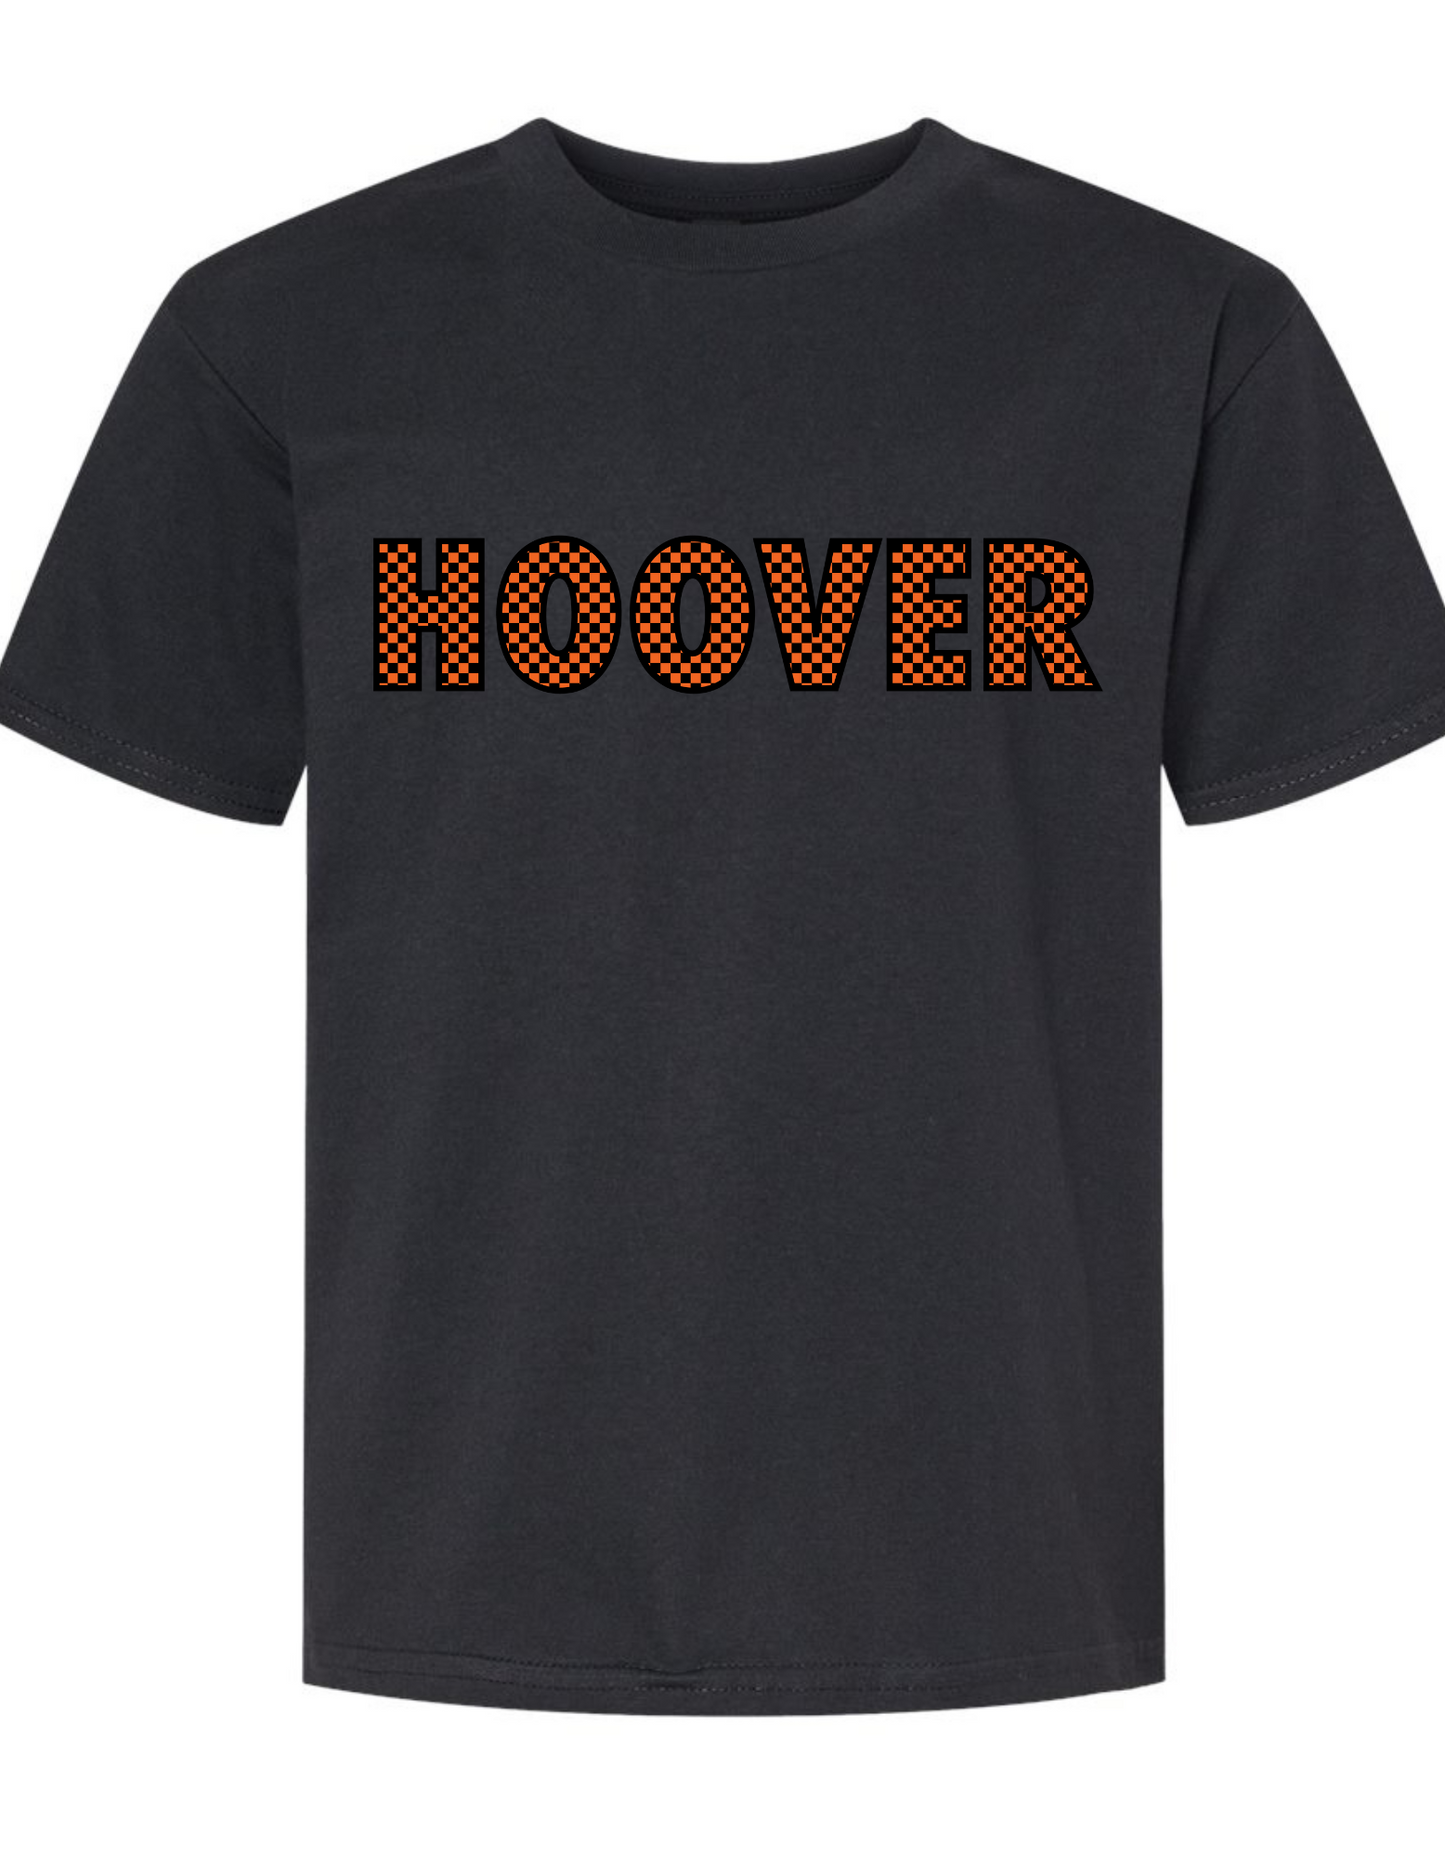 Hoover Block T'shirt